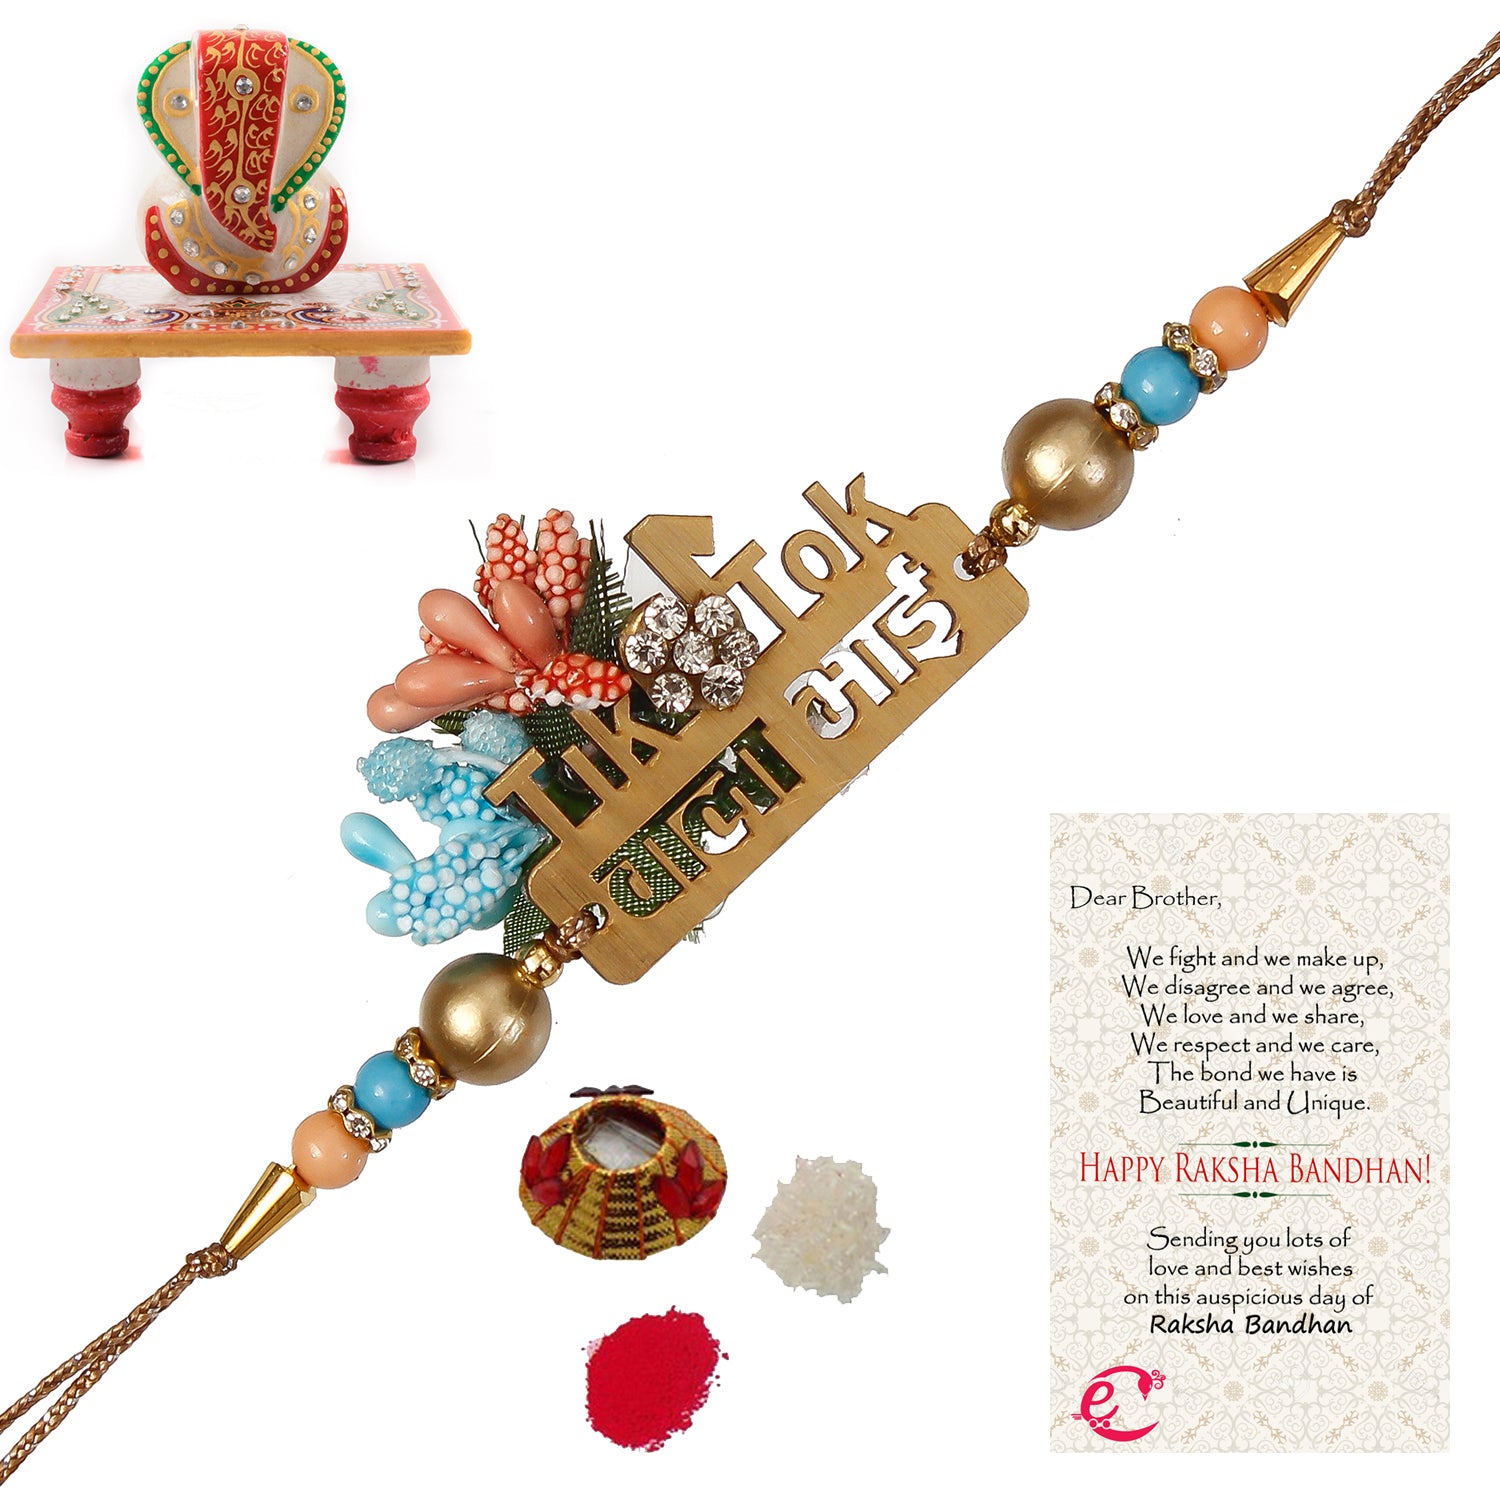 Designer Wooden Tiktok wala Bhai Rakhi with Lord Ganesha Marble Chowki and Roli Tikka Matki, Best Wishes Greeting Card